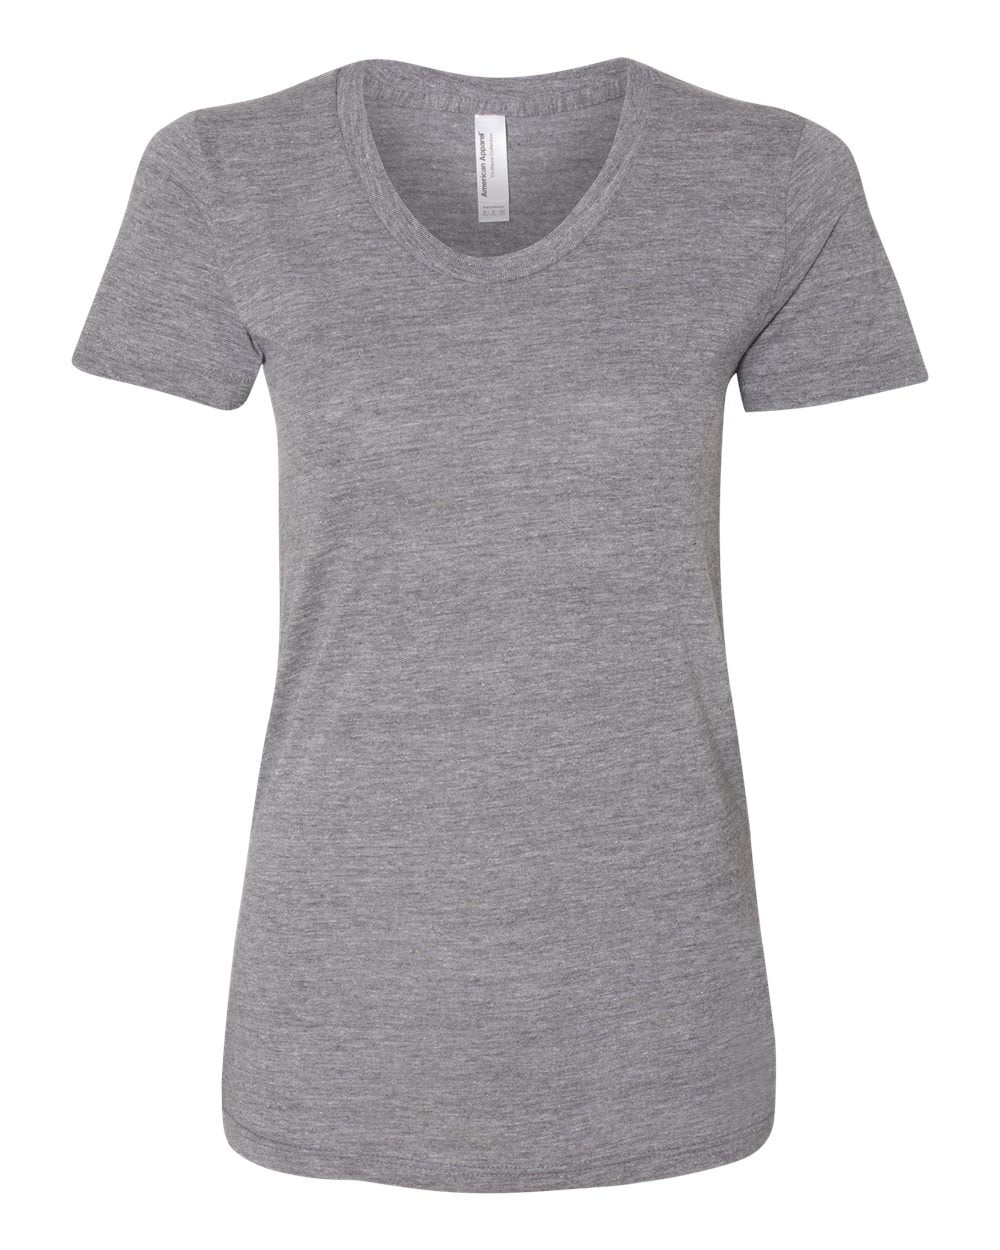 American Apparel Womens/Ladies Triblend T-Shirt